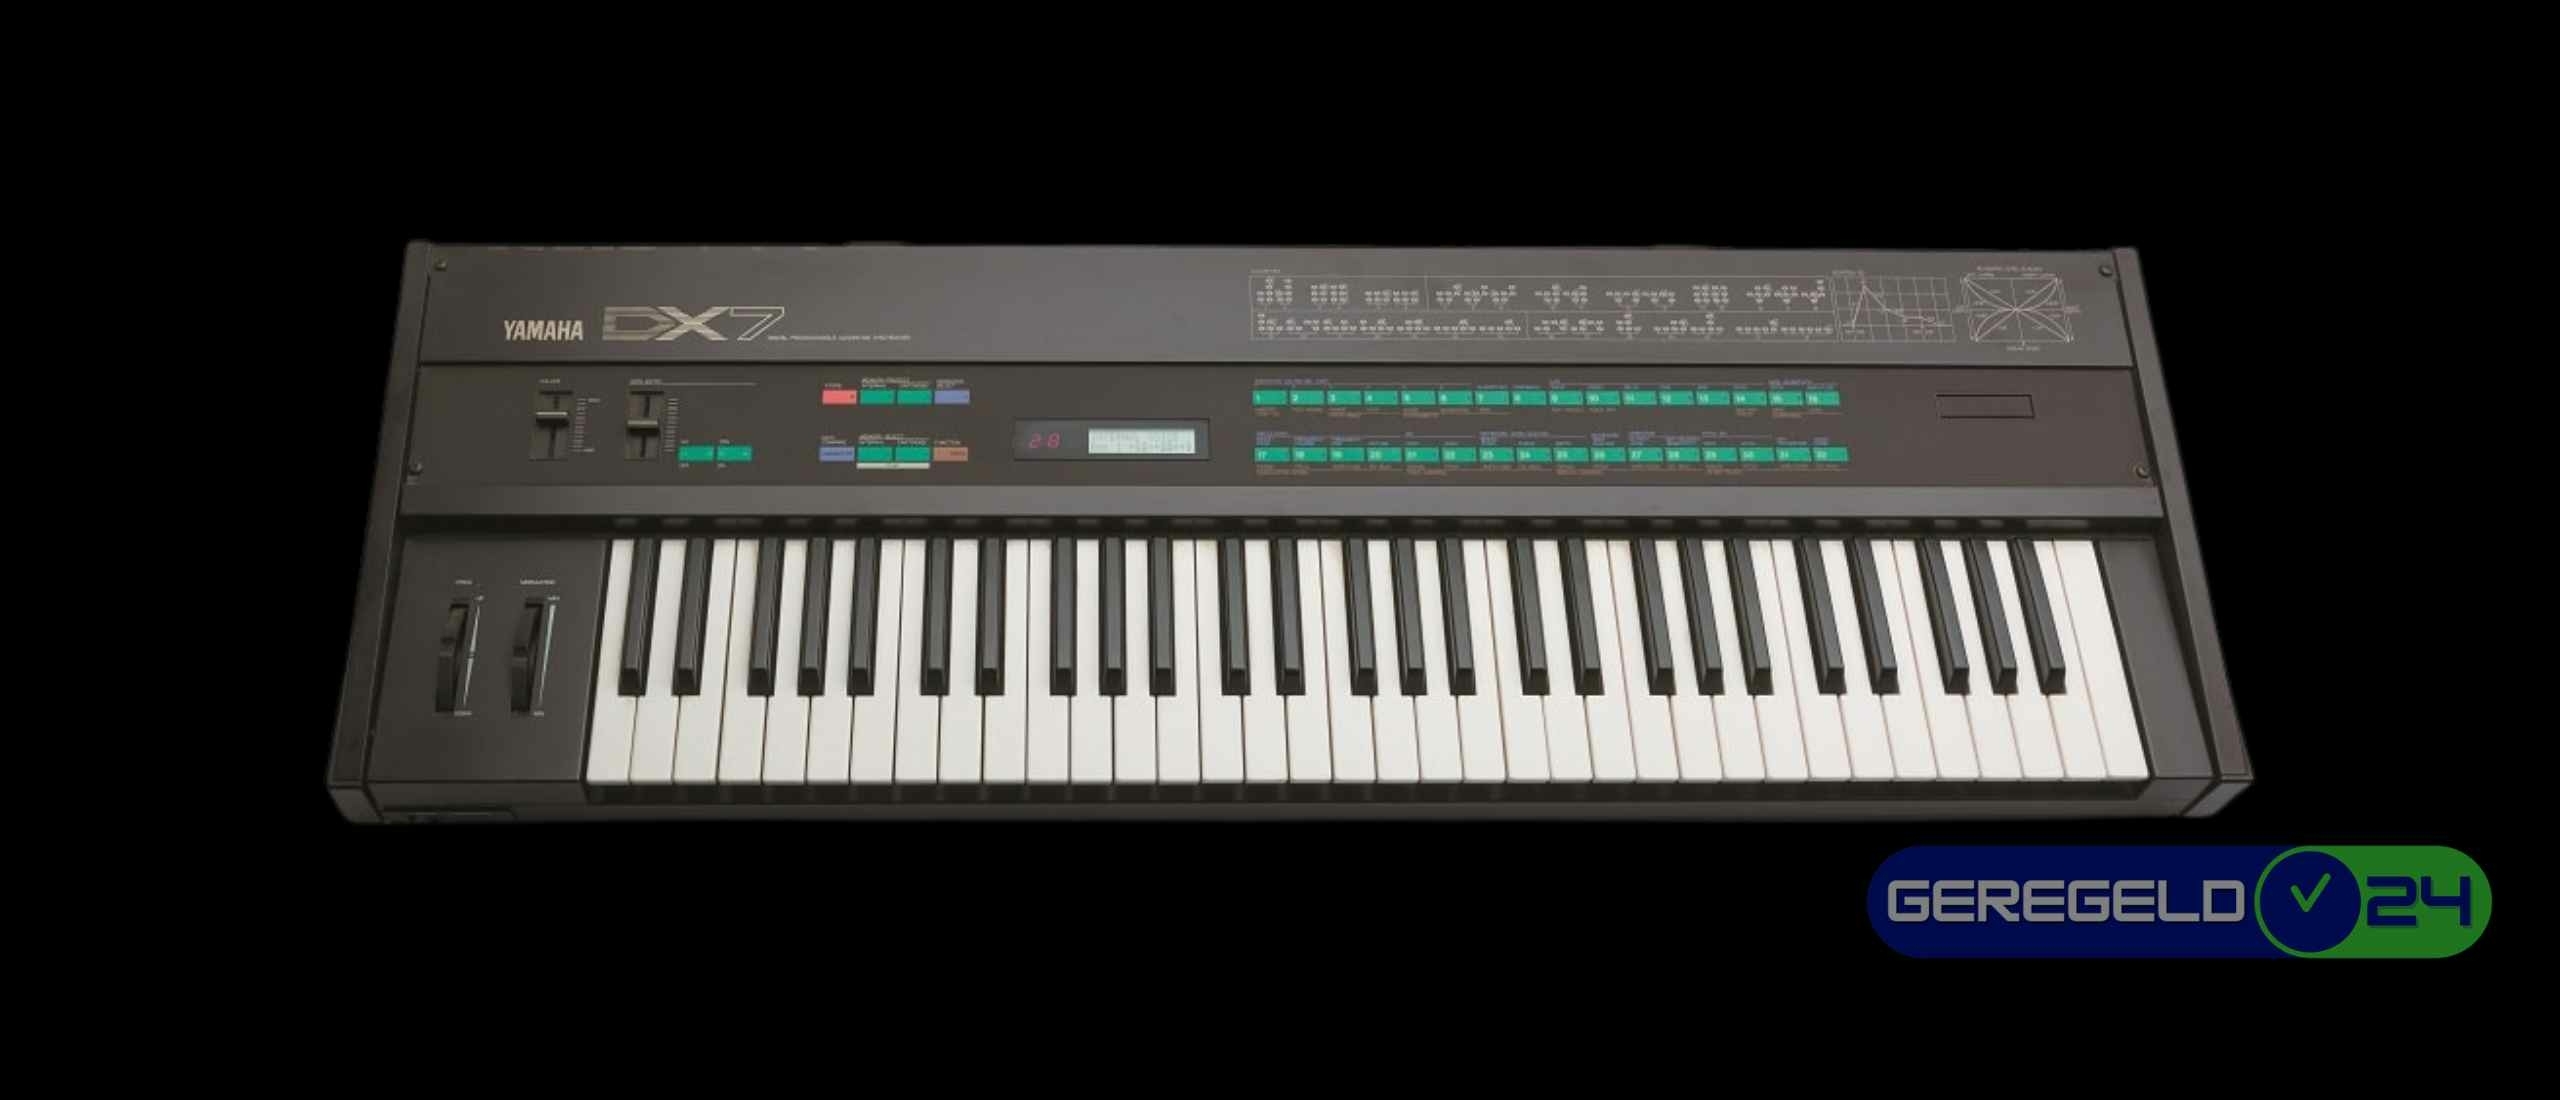 Yamaha DX7 Synthesizer: De revolutie van de digitale synthese